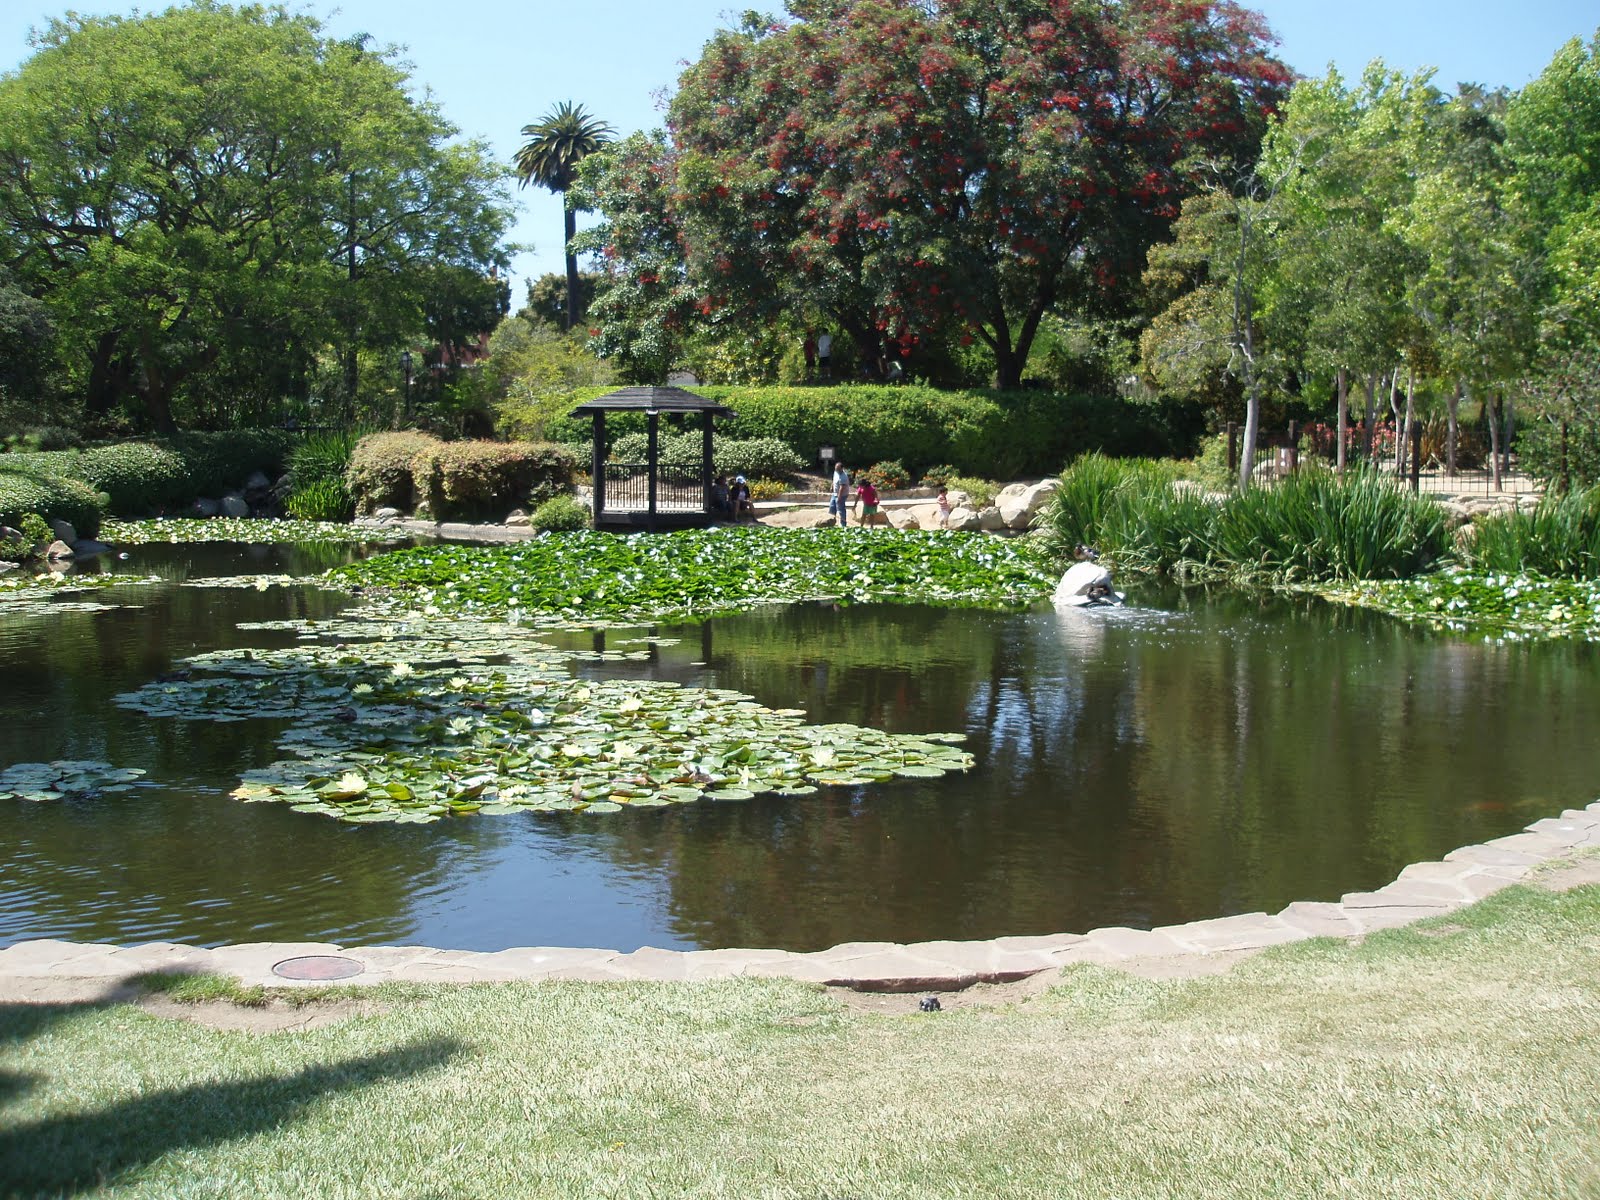 Santa Barbara Sights and Events: Alice's Garden